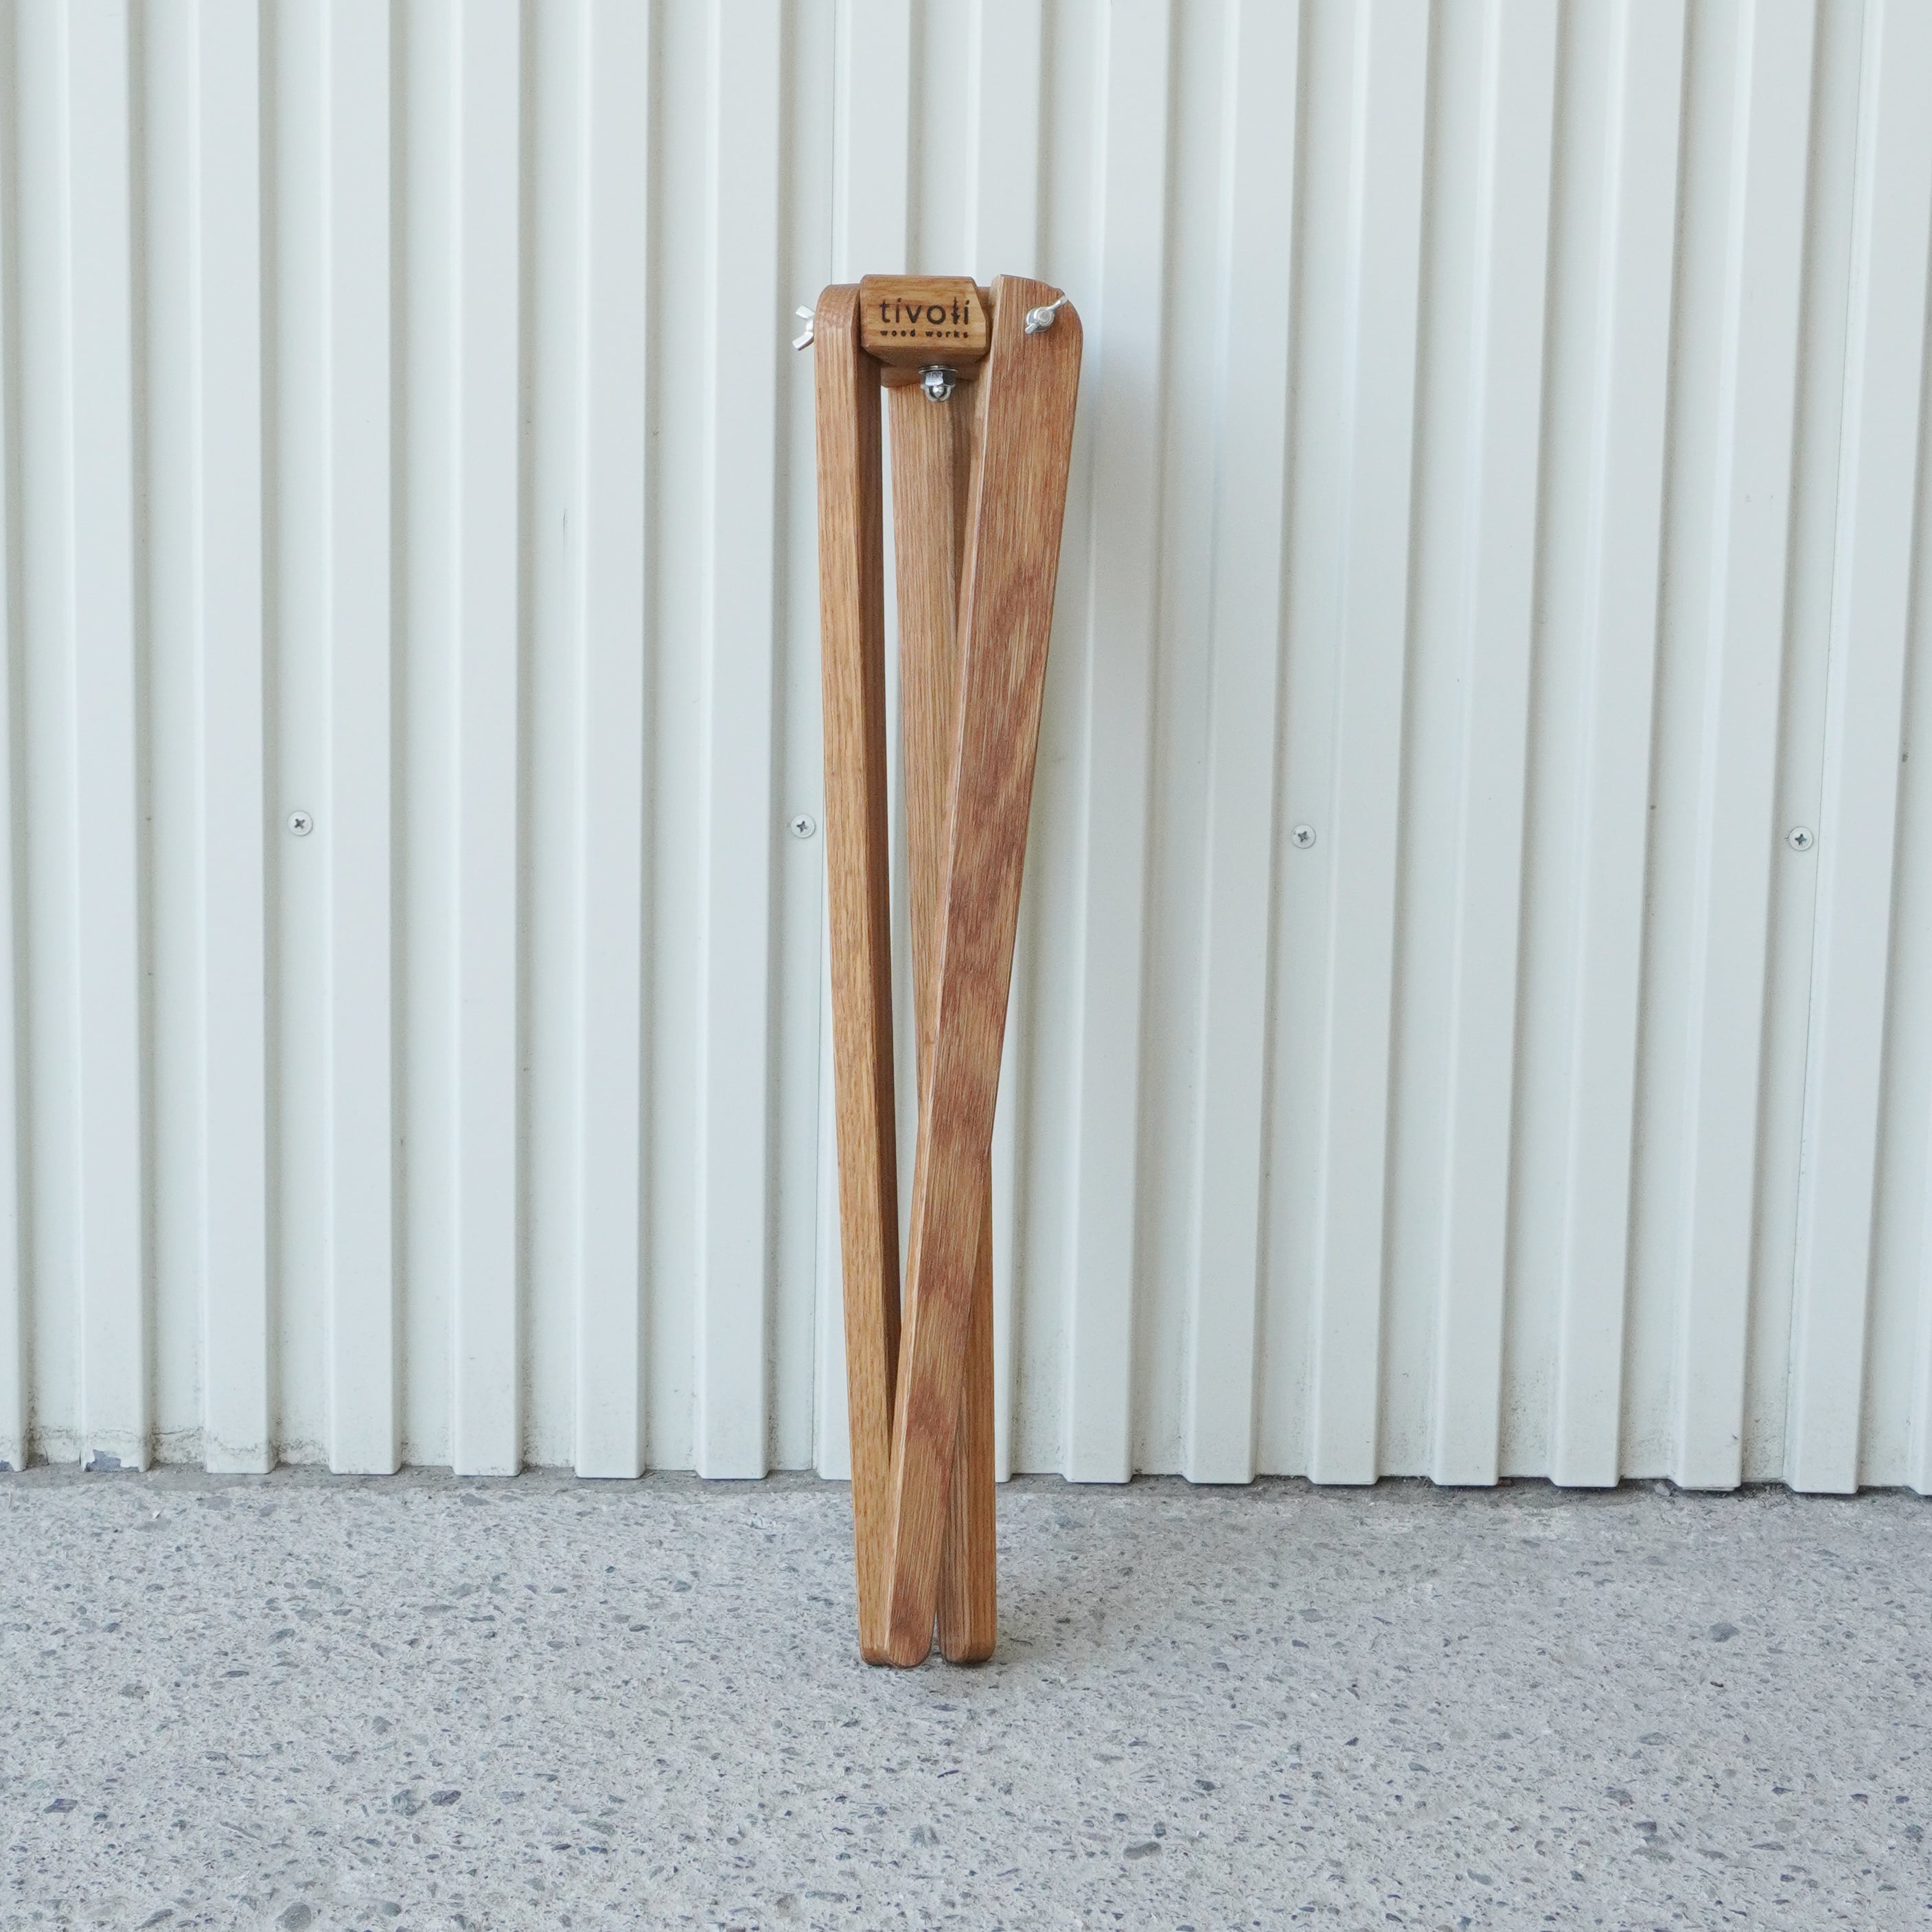 tivoli wood works - ウッド三脚400 - | OutdoorLife kano